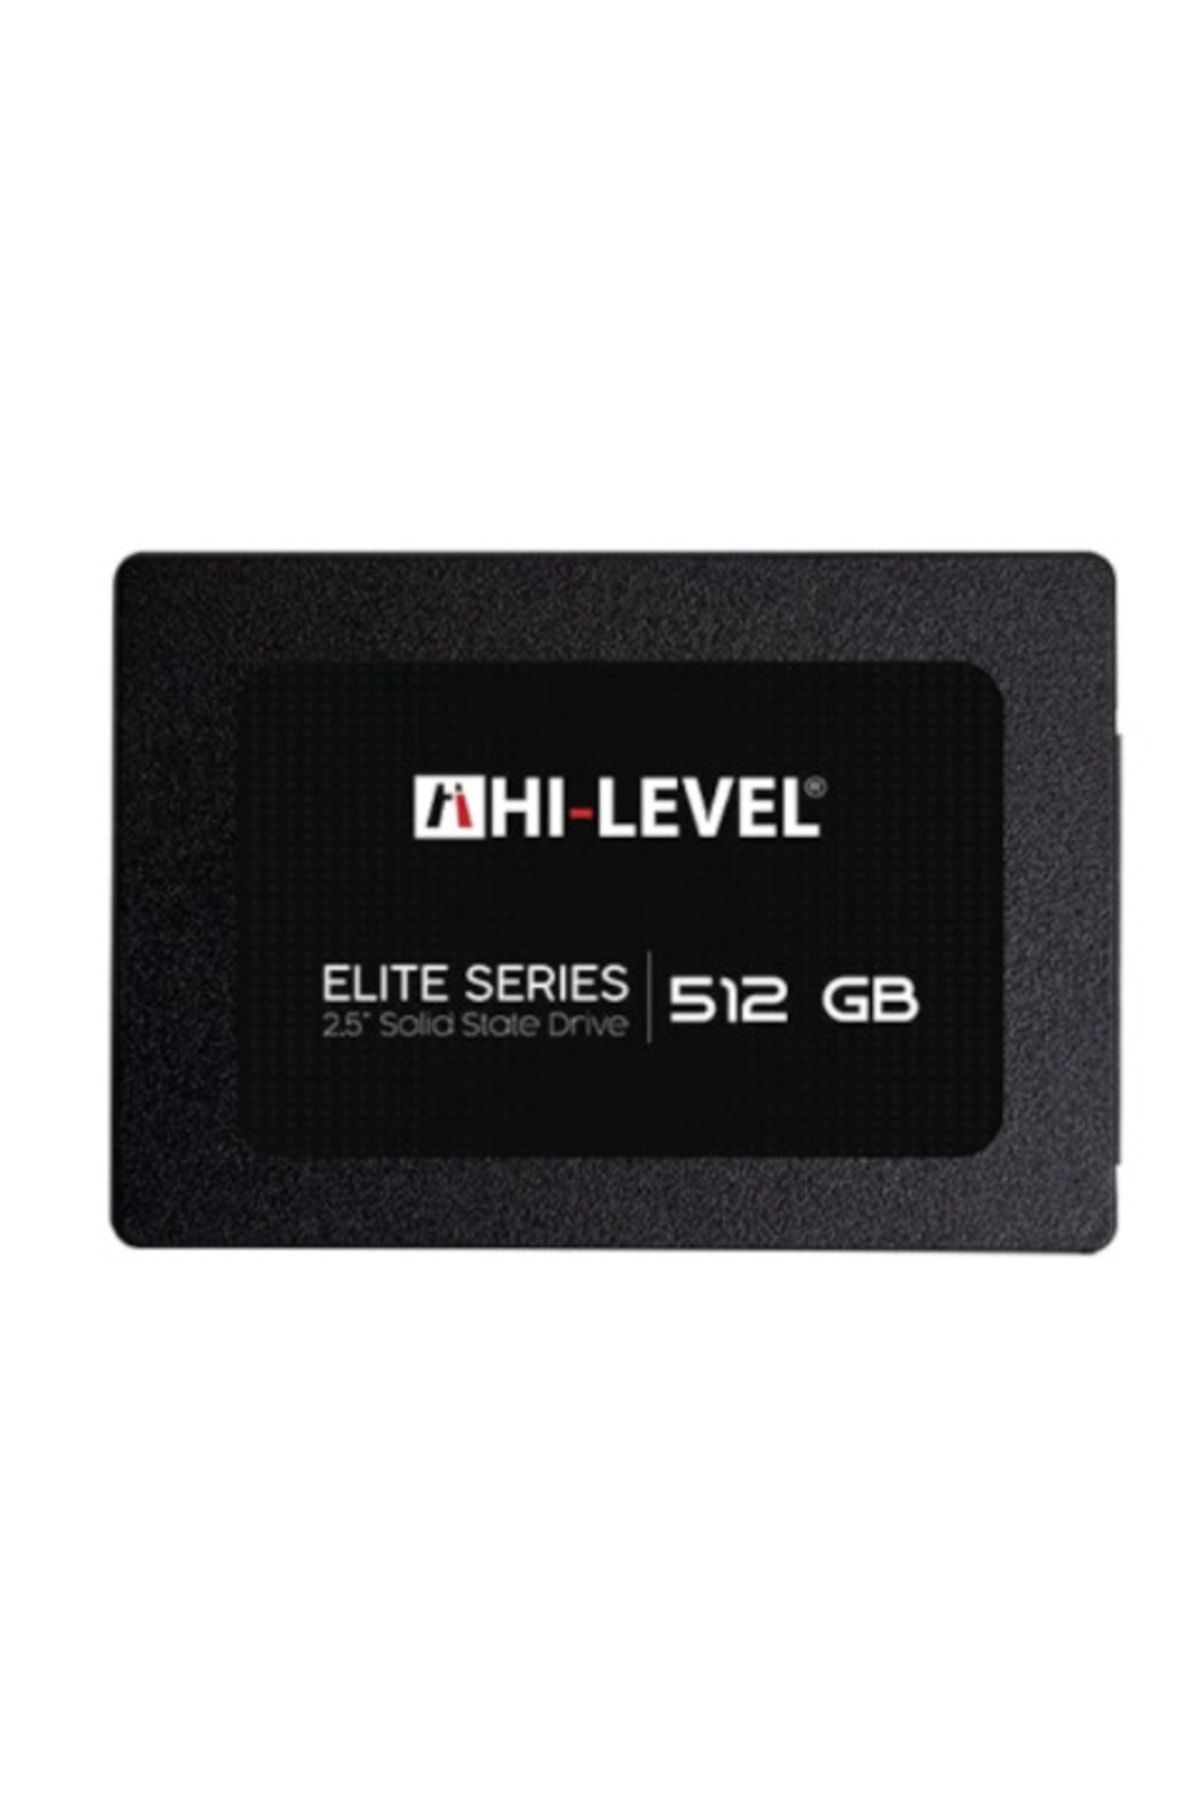 Hi-Level Elite Hlv-ssd30elt/512g 512gb 560-540mb/s Sata3 2.5" Ssd